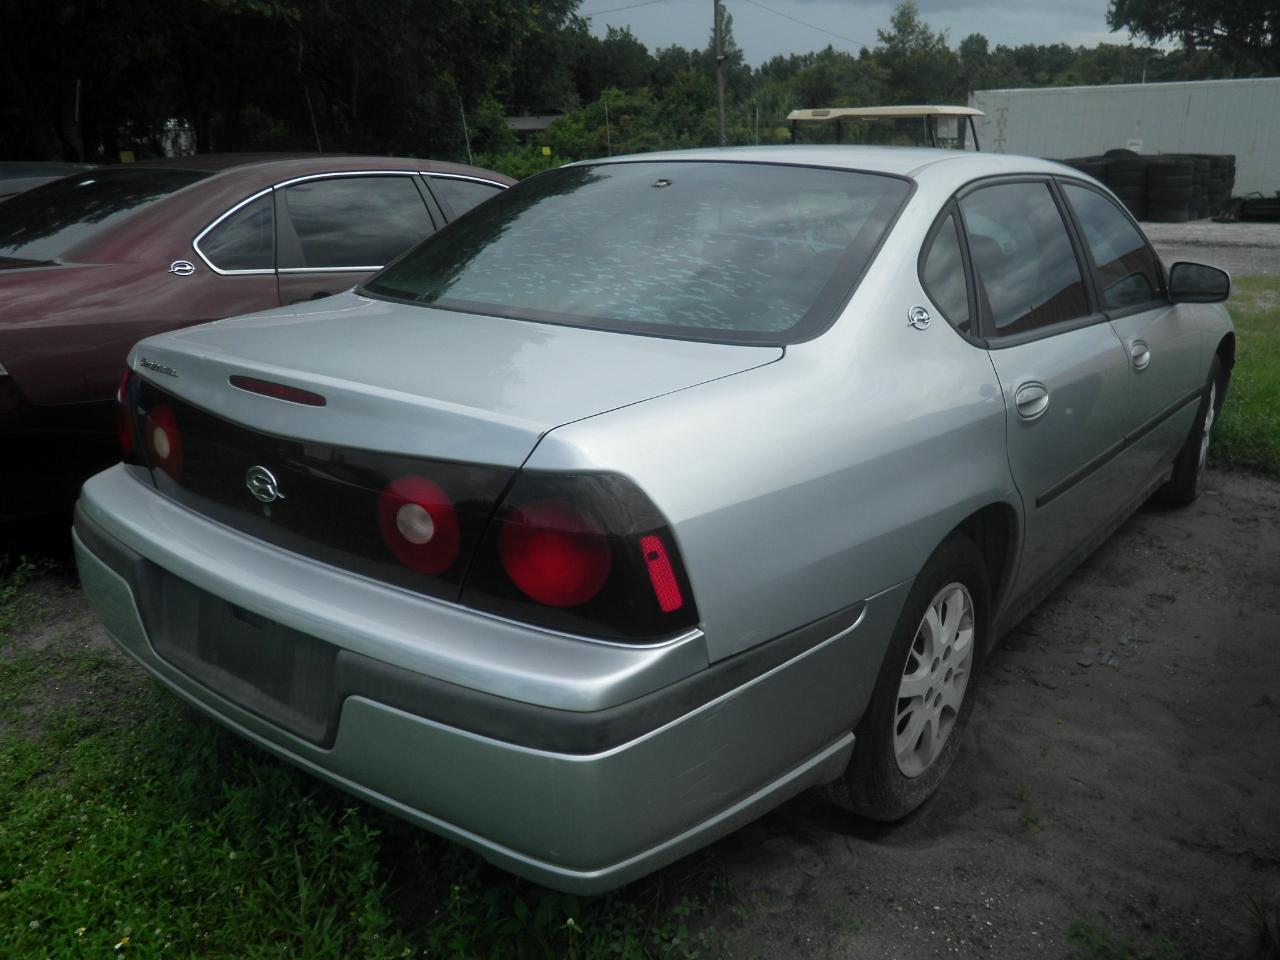 7-05114 (Cars-Sedan 4D)  Seller: Florida State Dfs 2004 CHEV IMPALA